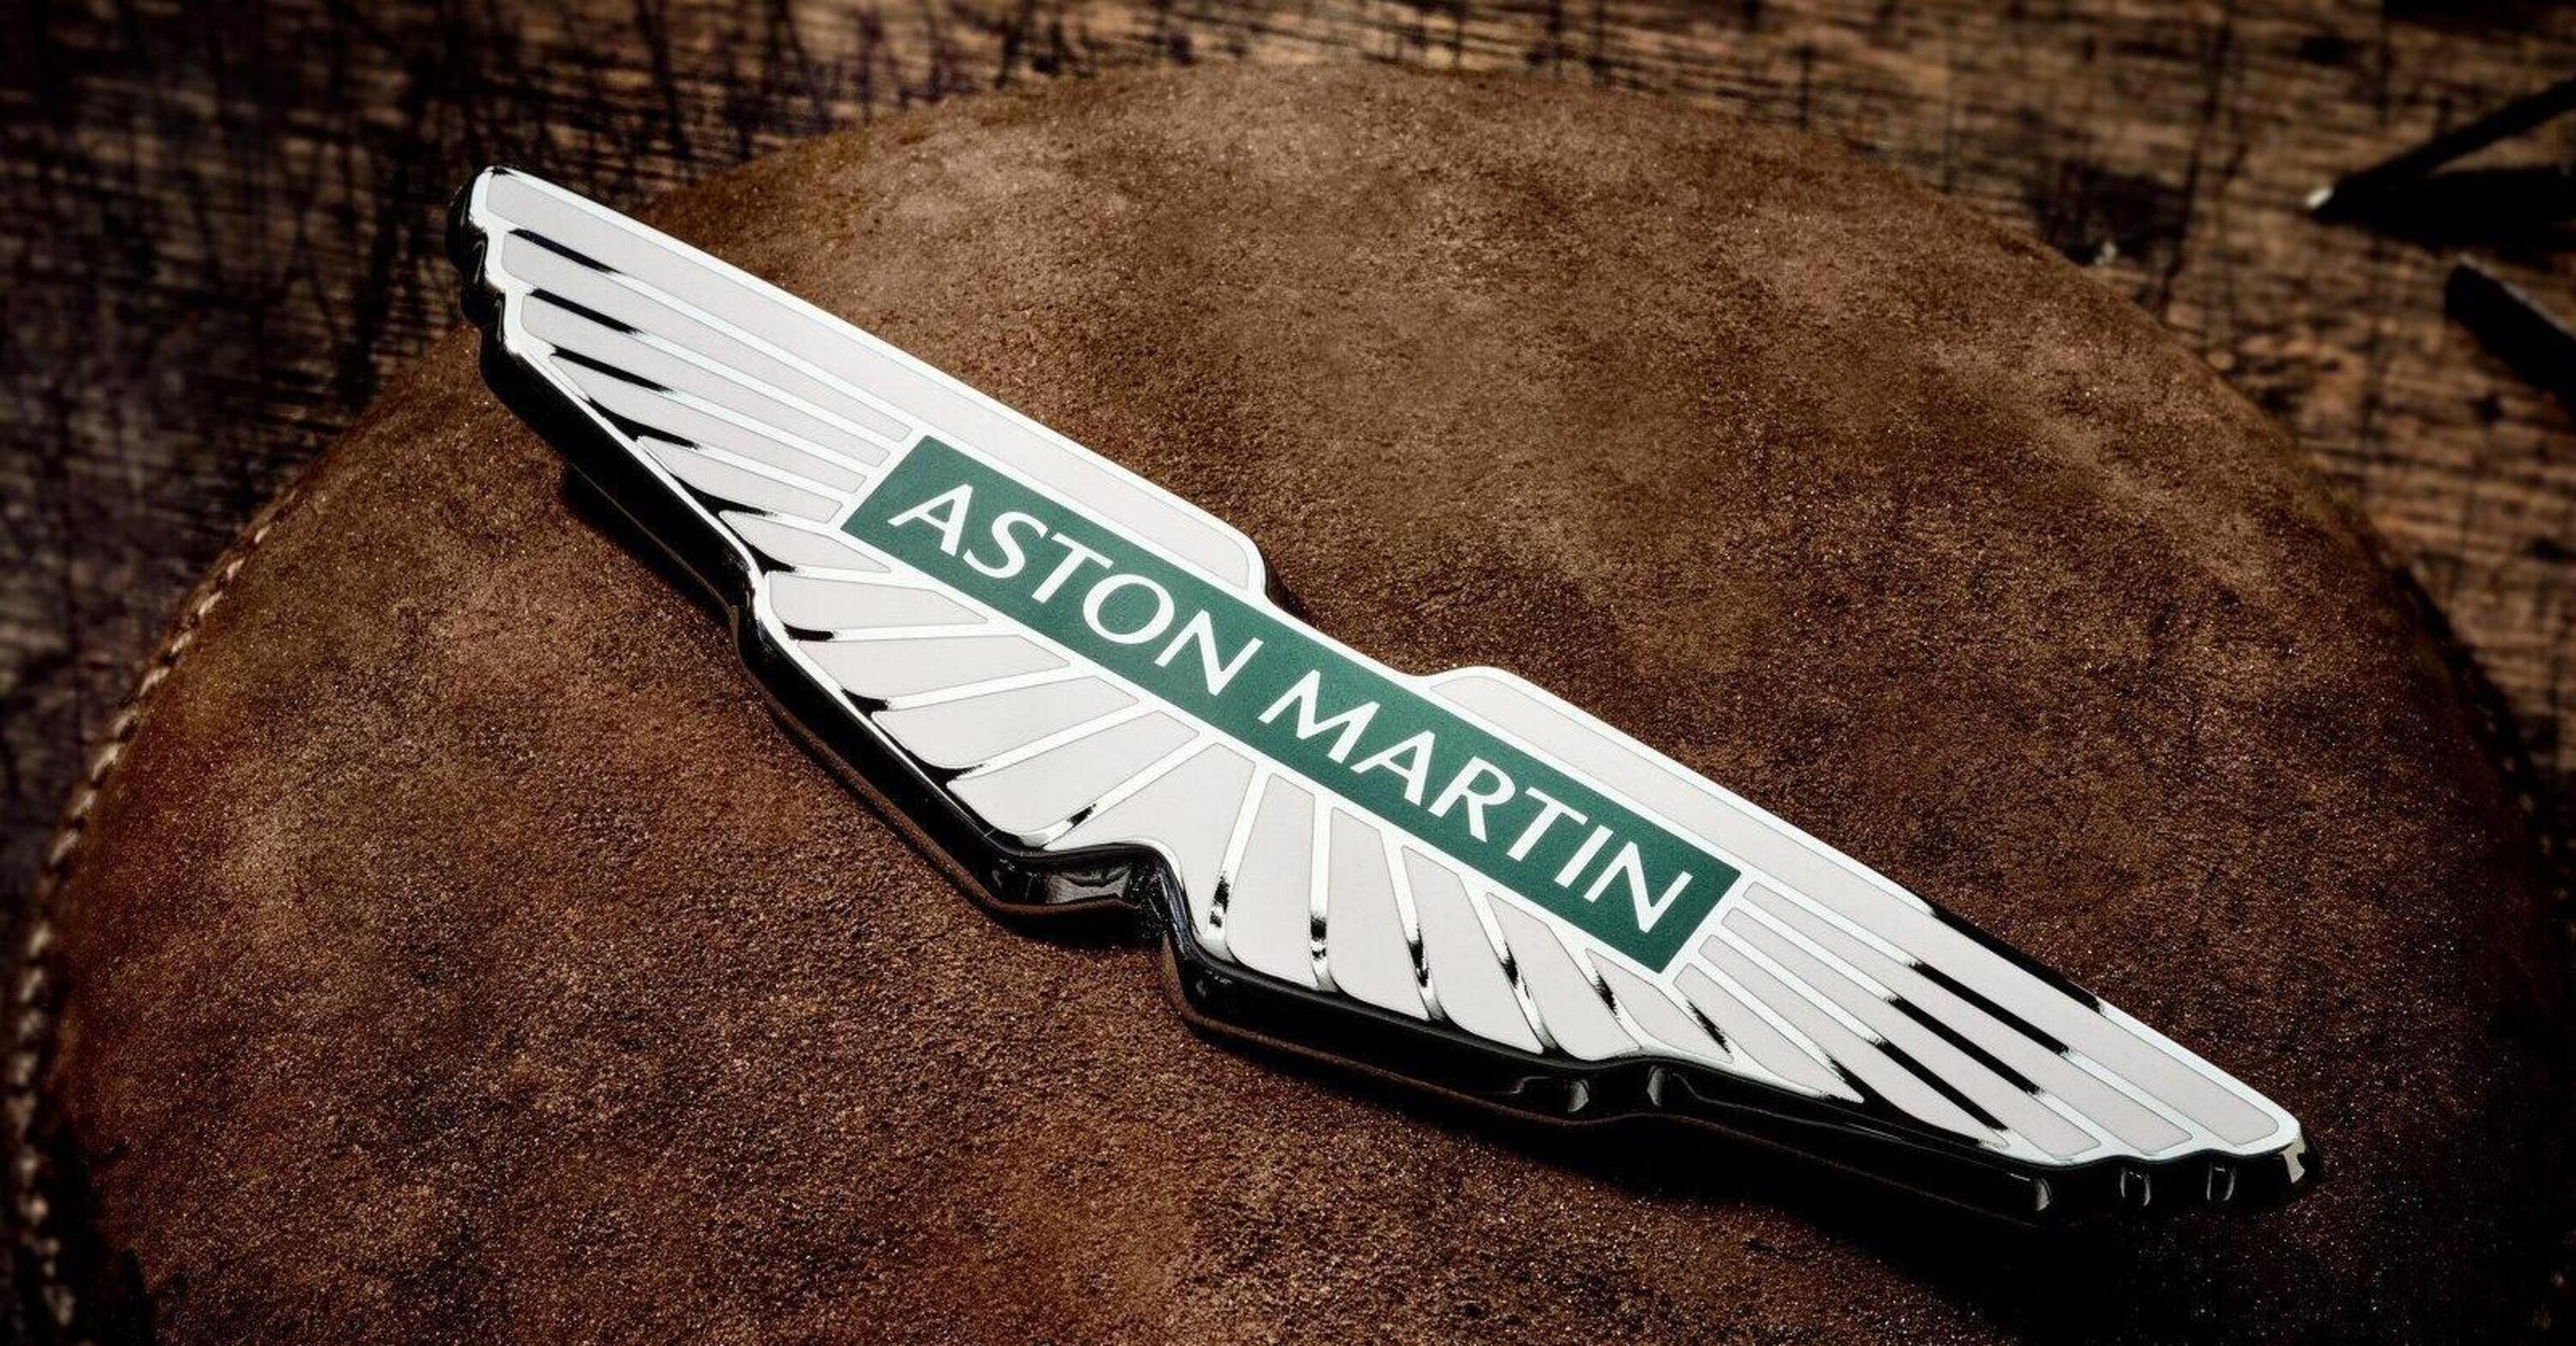 Aston Martin, Geely incrementa la partecipazione al 17%